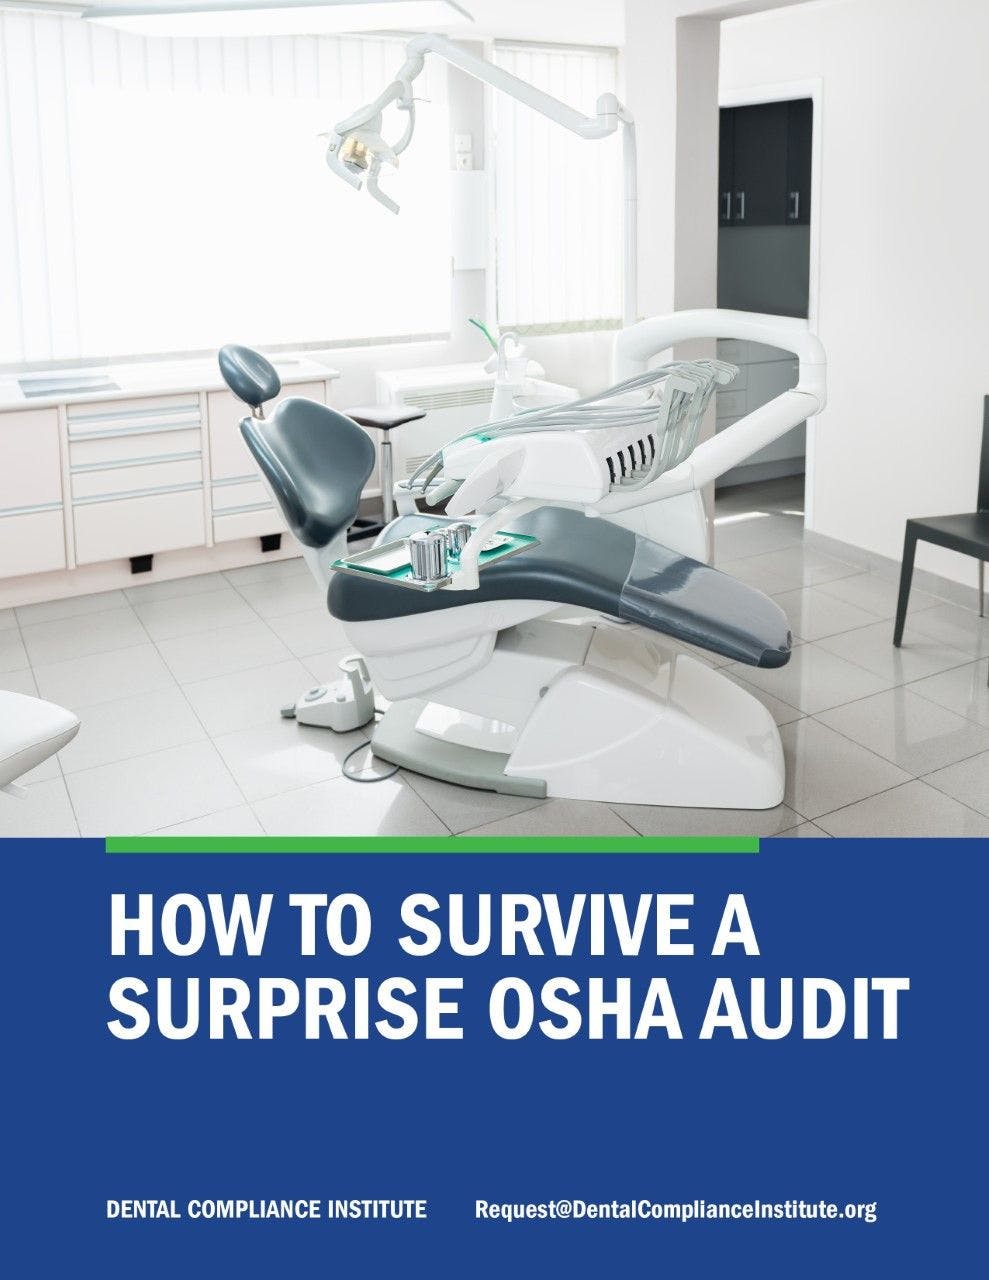 Dental Compliance Institute Publishes OSHA Audit Guide